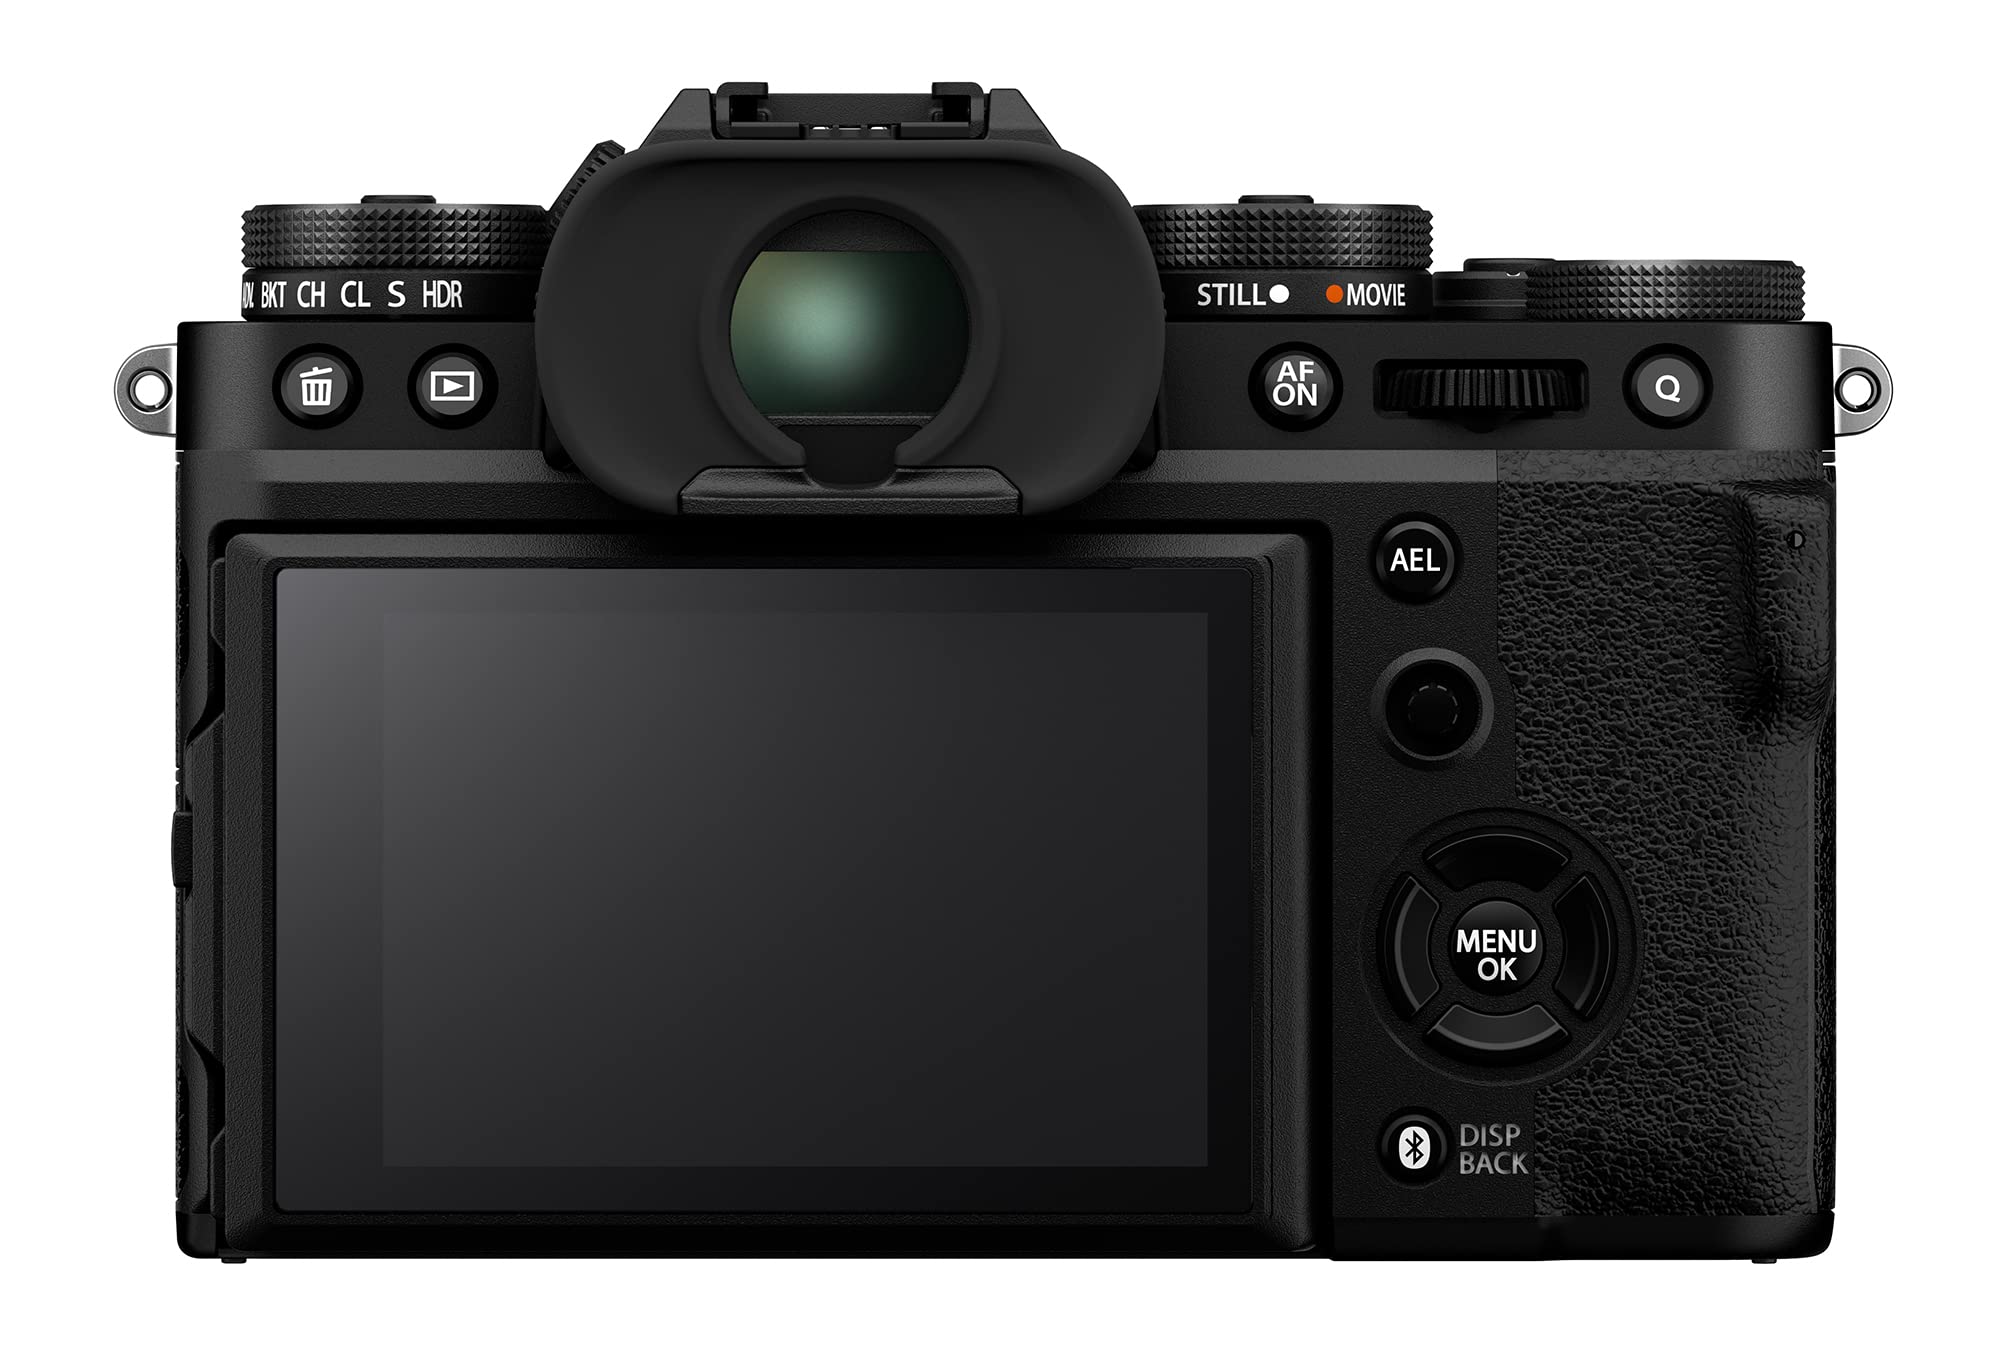 Fujifilm X-T5 Mirrorless Digital Camera Body - Black